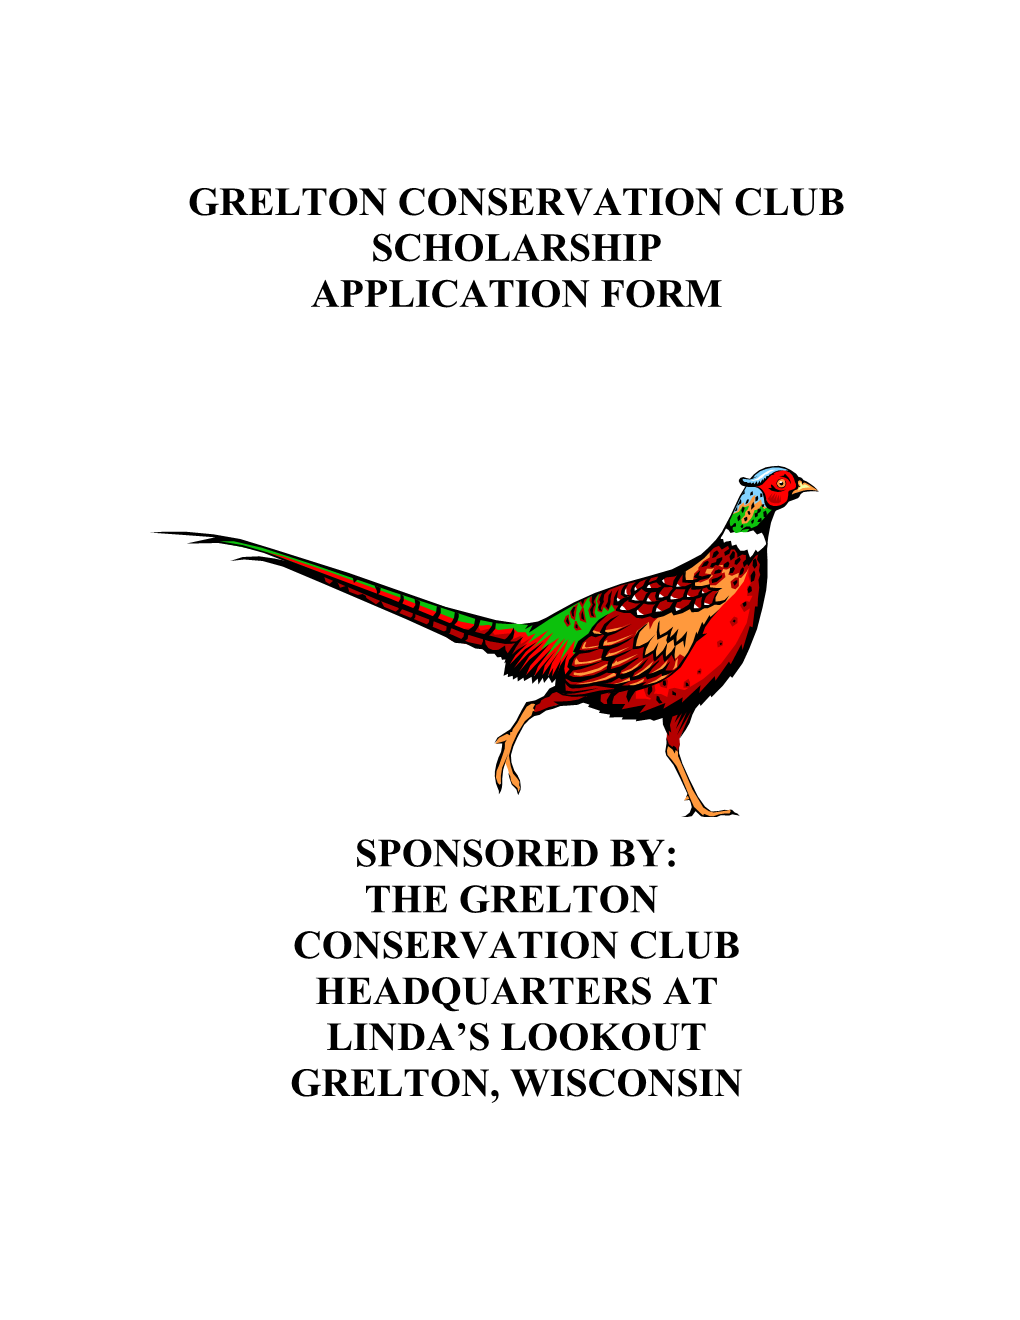 The Grellton Conservation Club